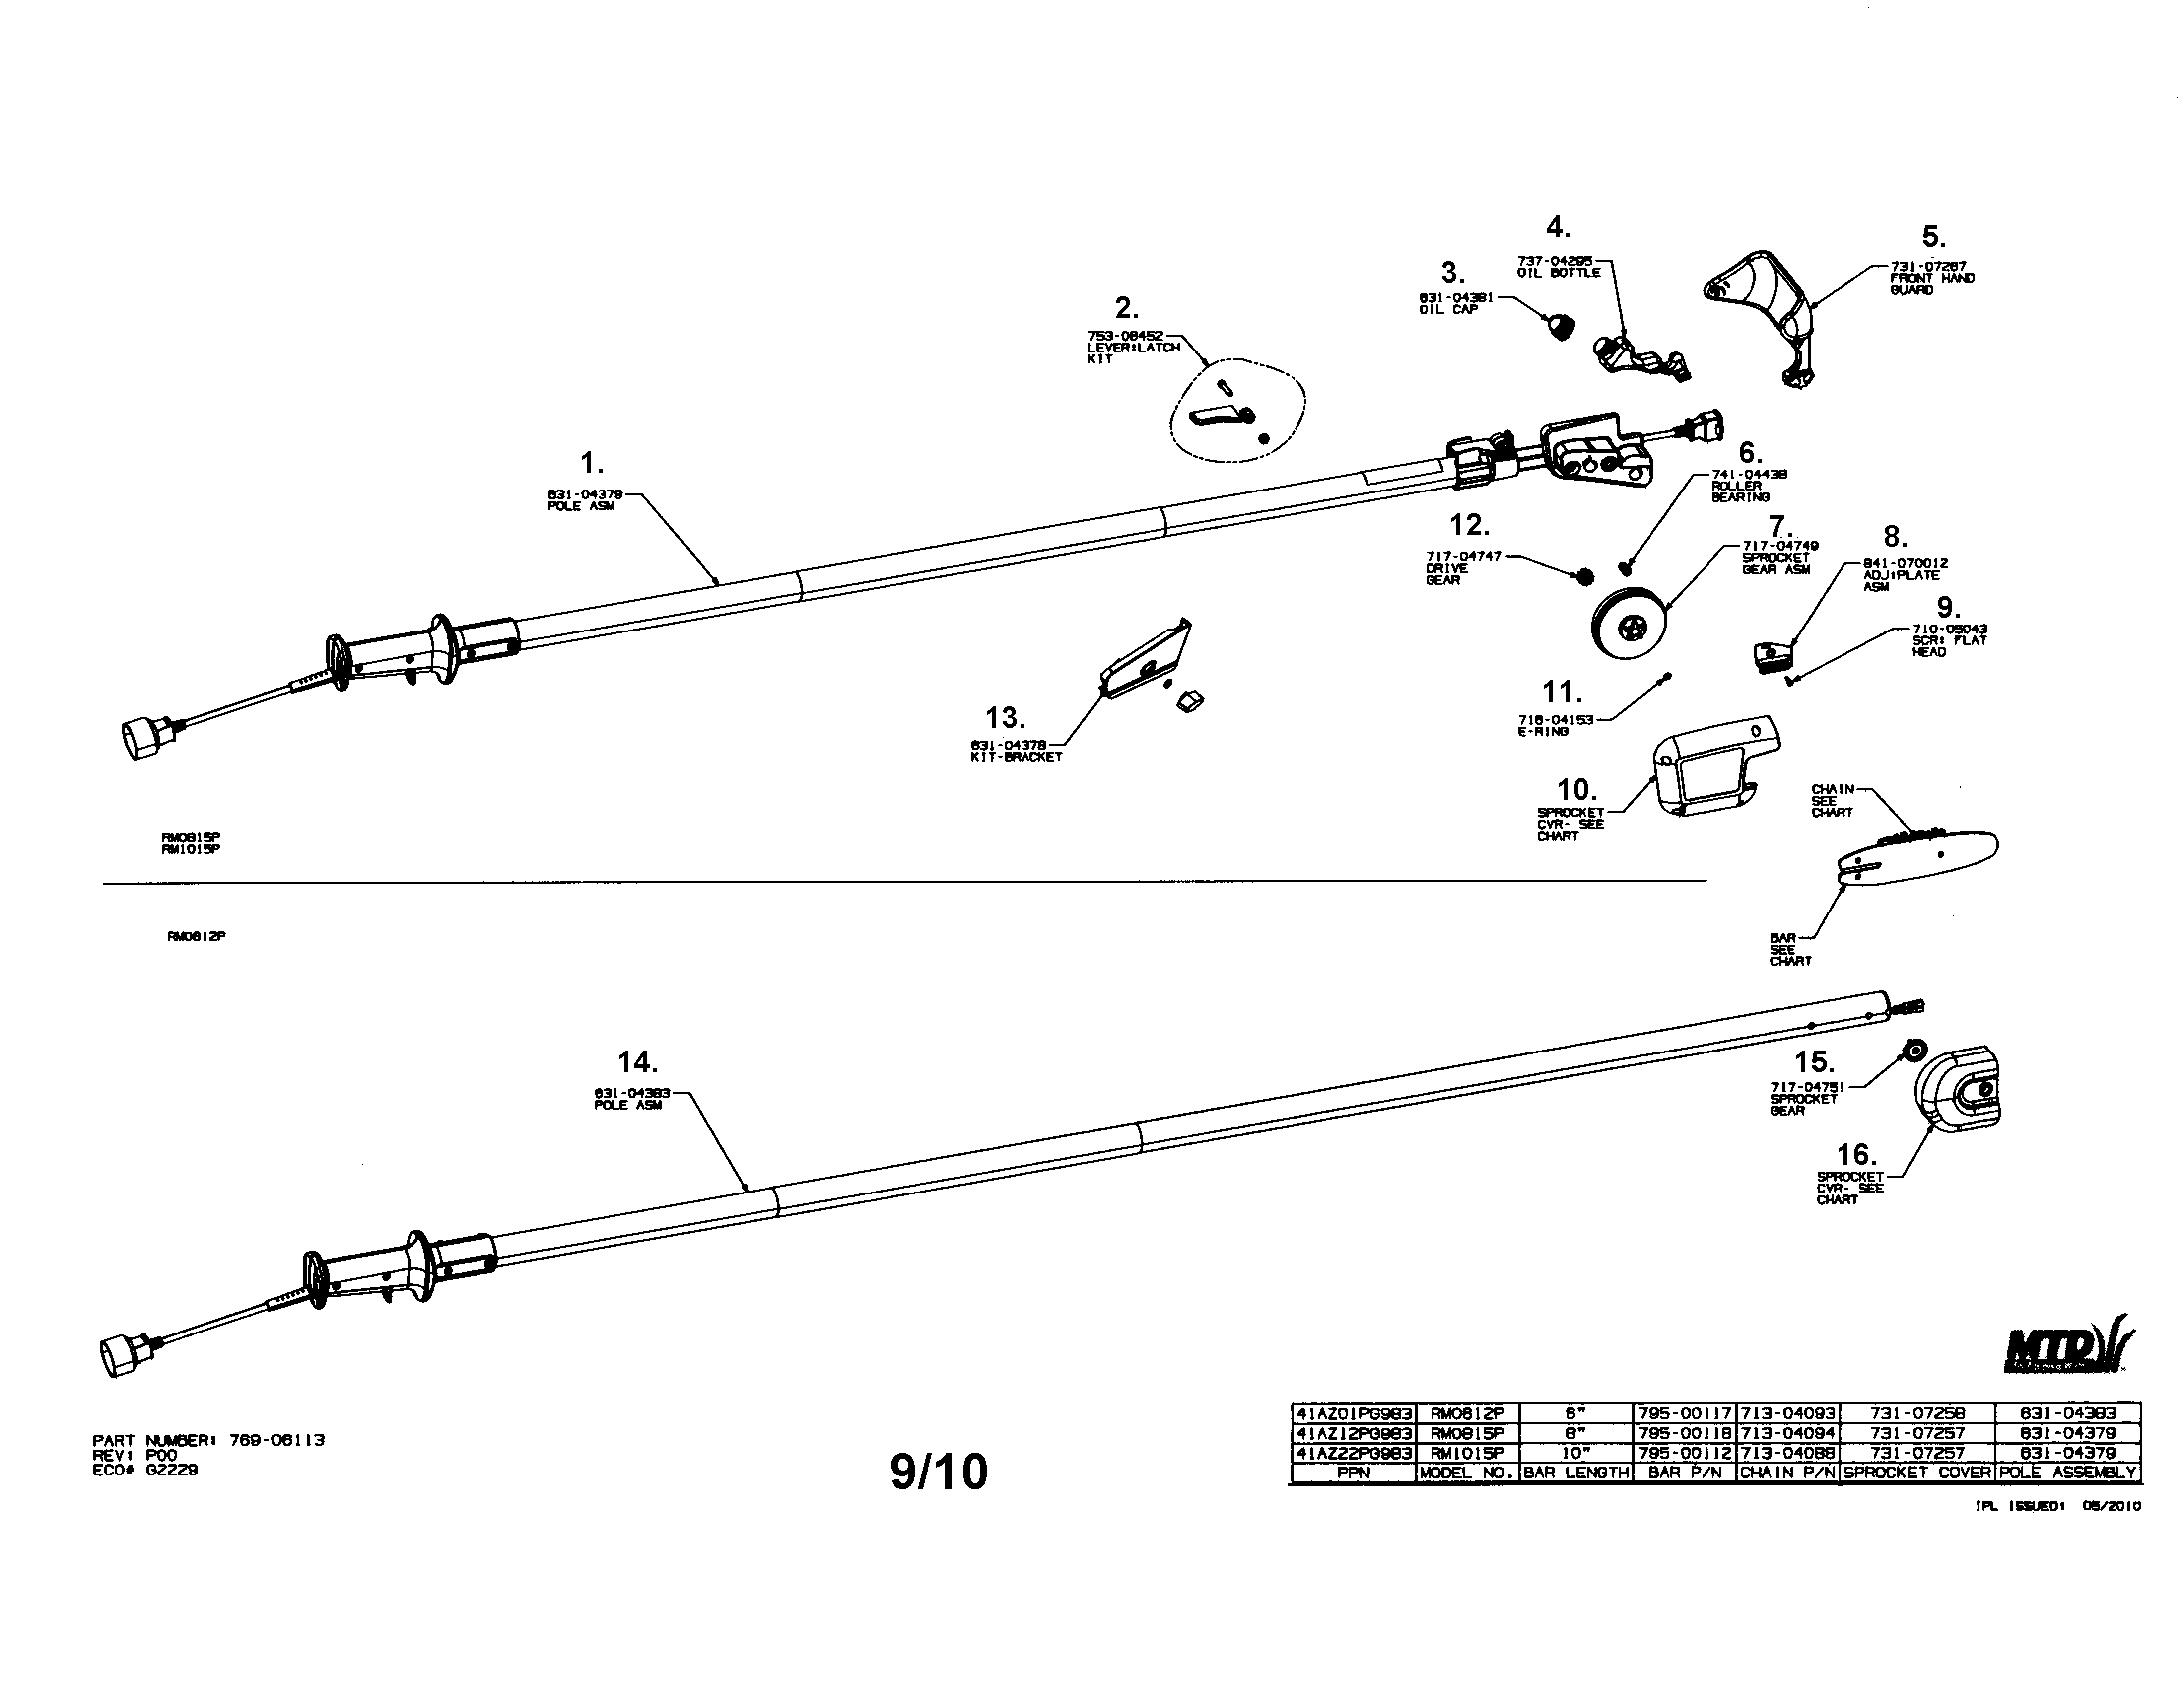 35 Remington Pole Saw Parts Diagram - Wiring Diagram Database